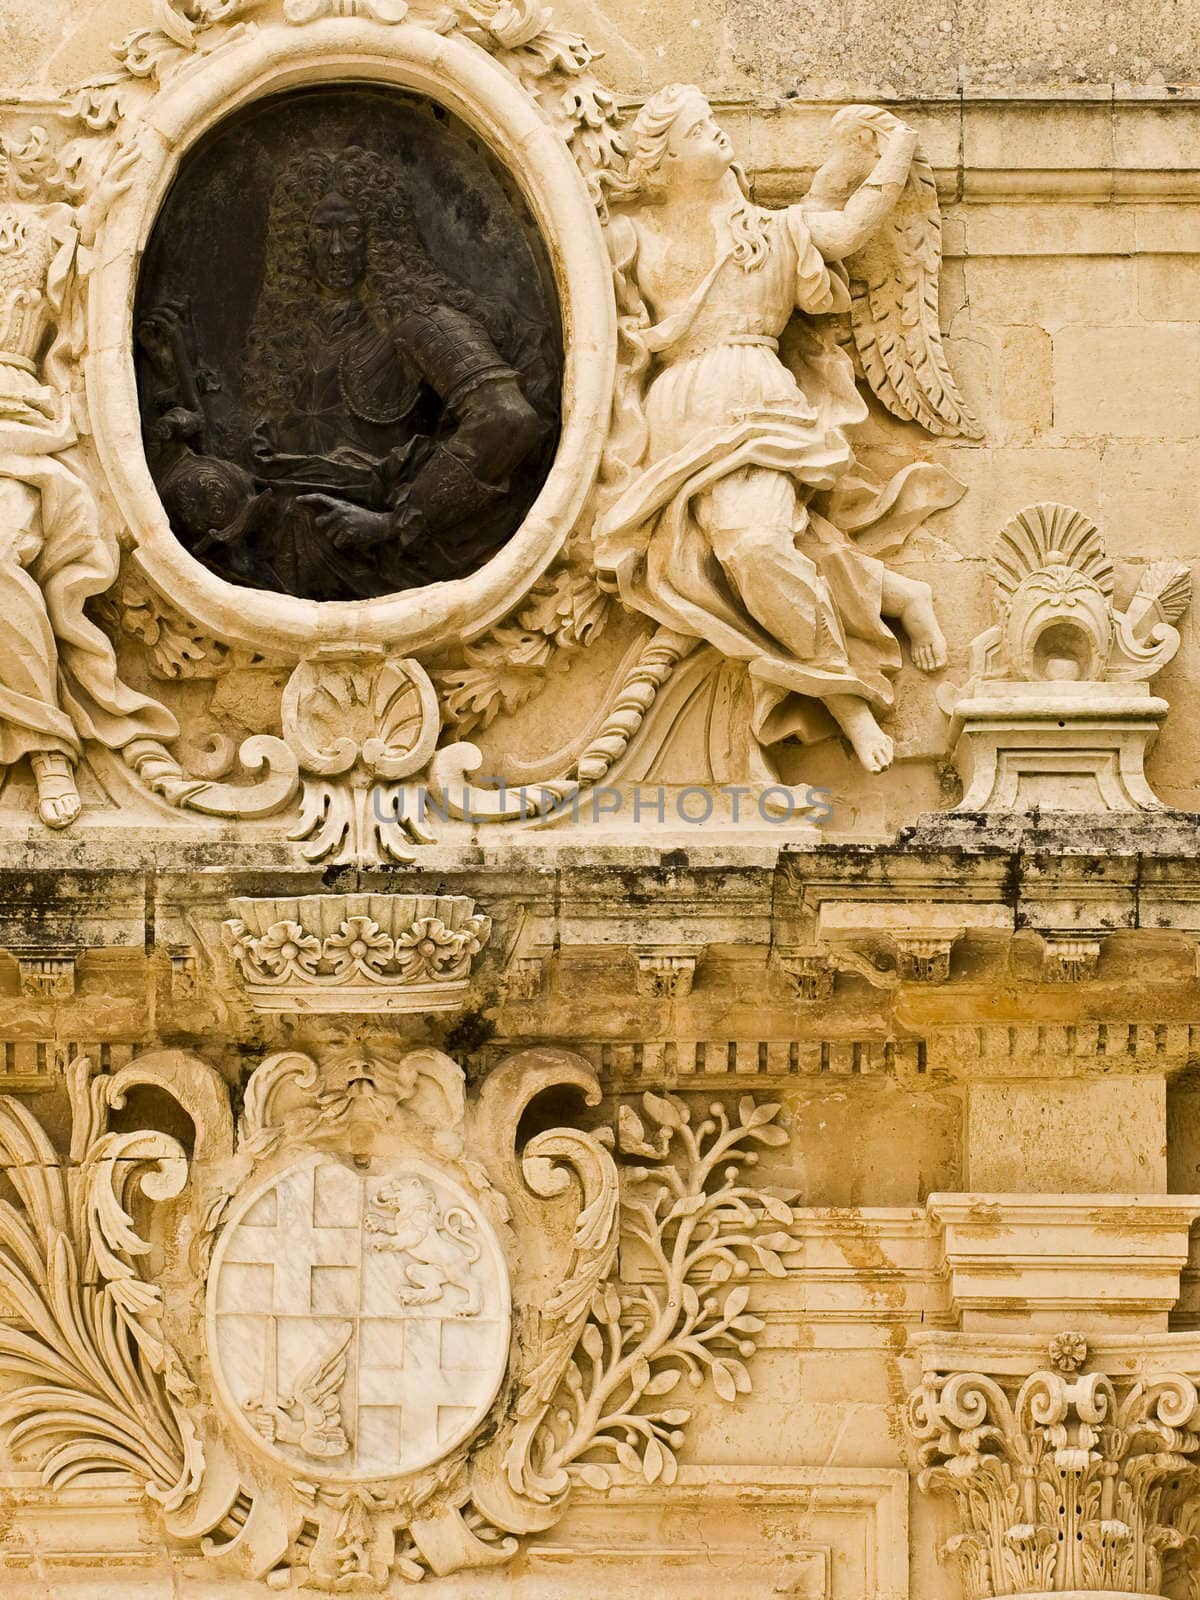 Medieval Baroque Facade by PhotoWorks